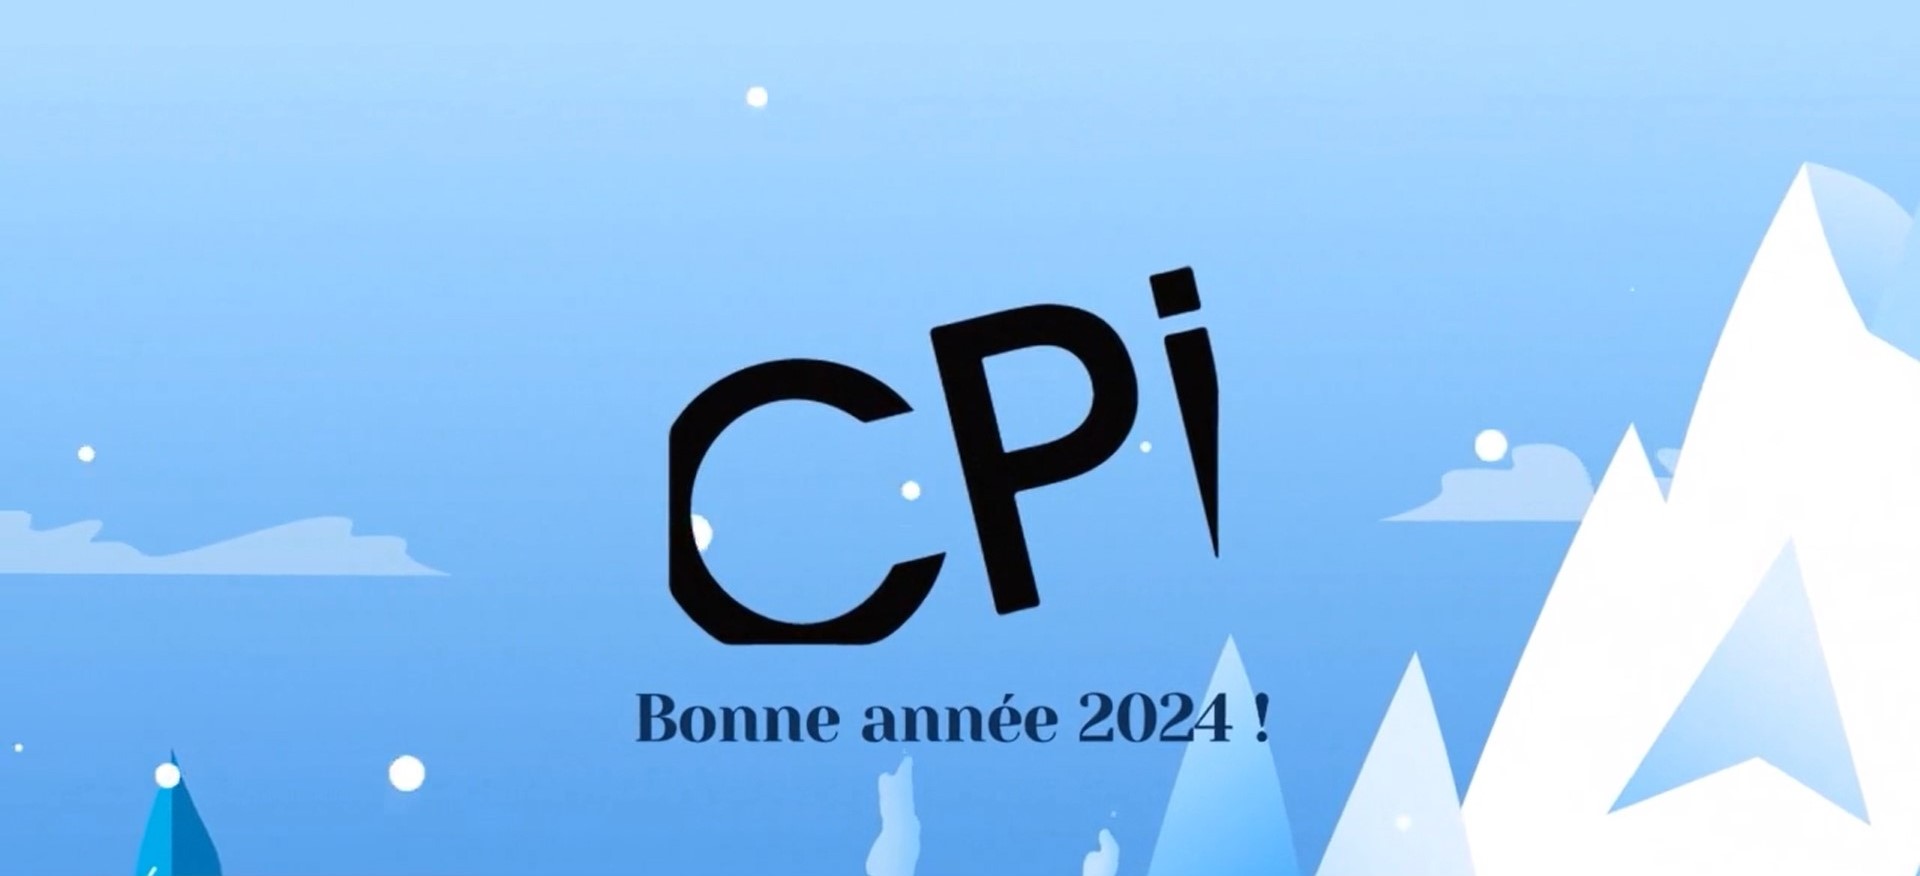 Bonne année 2024 CPI France